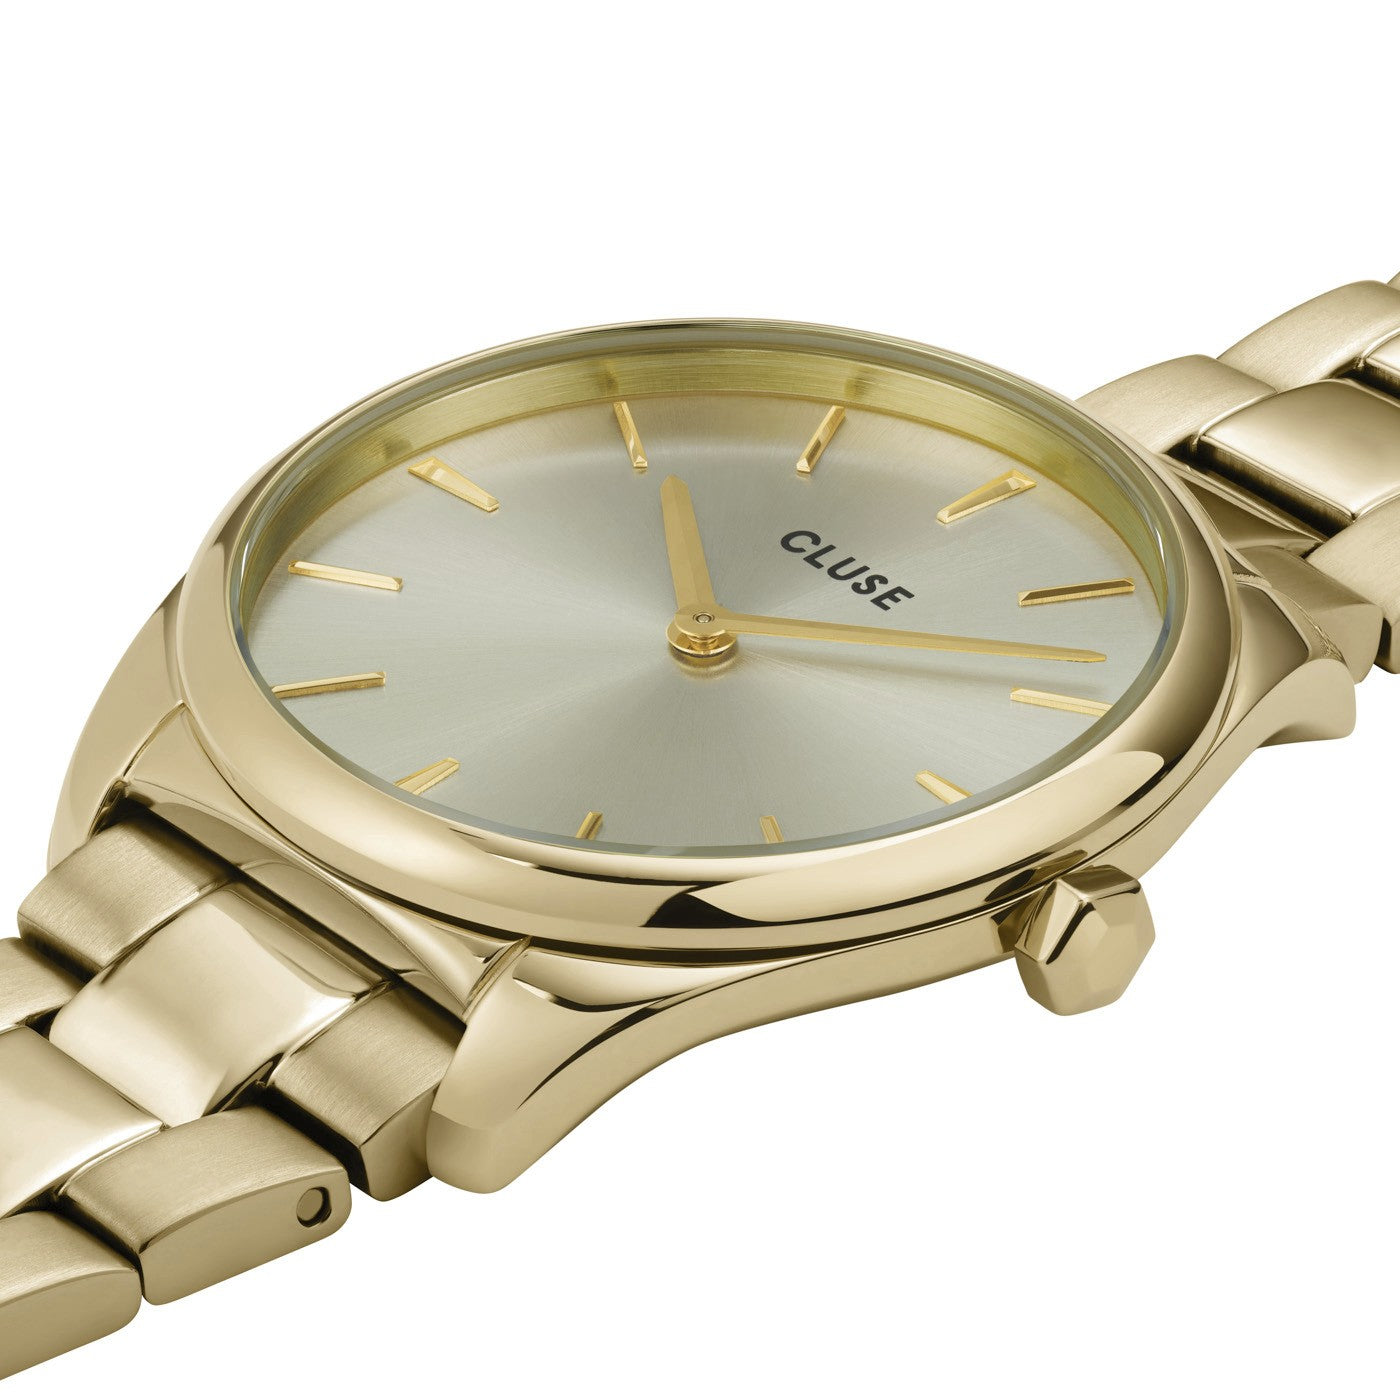 Cluse Feroce Petite Watch Gold